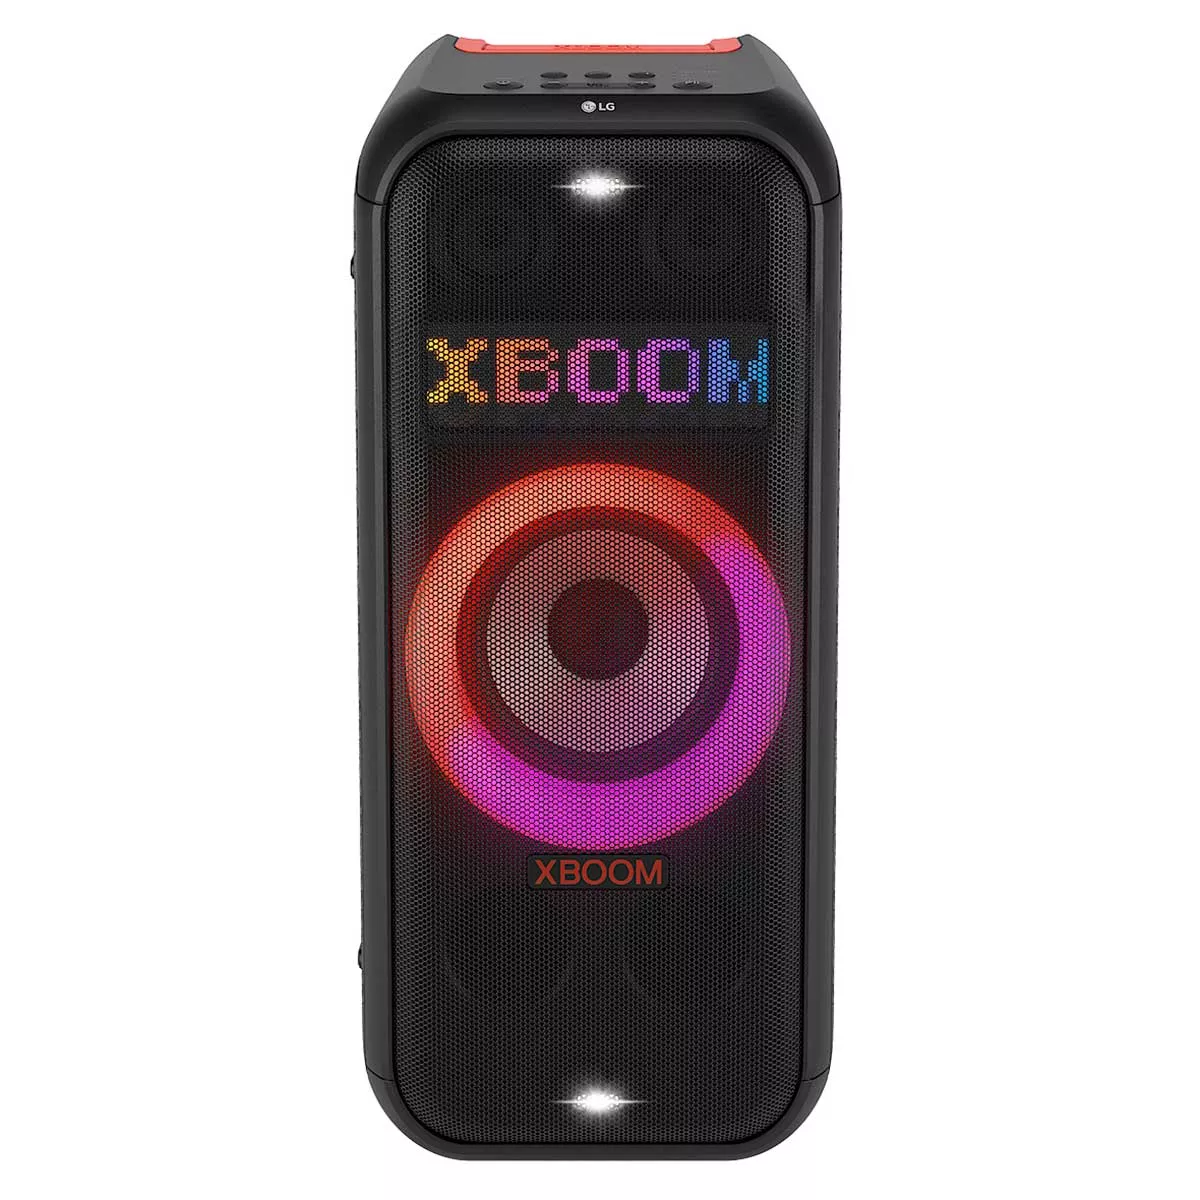 Caixa De Som Partybox Lg Xboom Xl7s Bateria 20h 250w Rms Display De Pixel Led Ipx4 Sound Boost